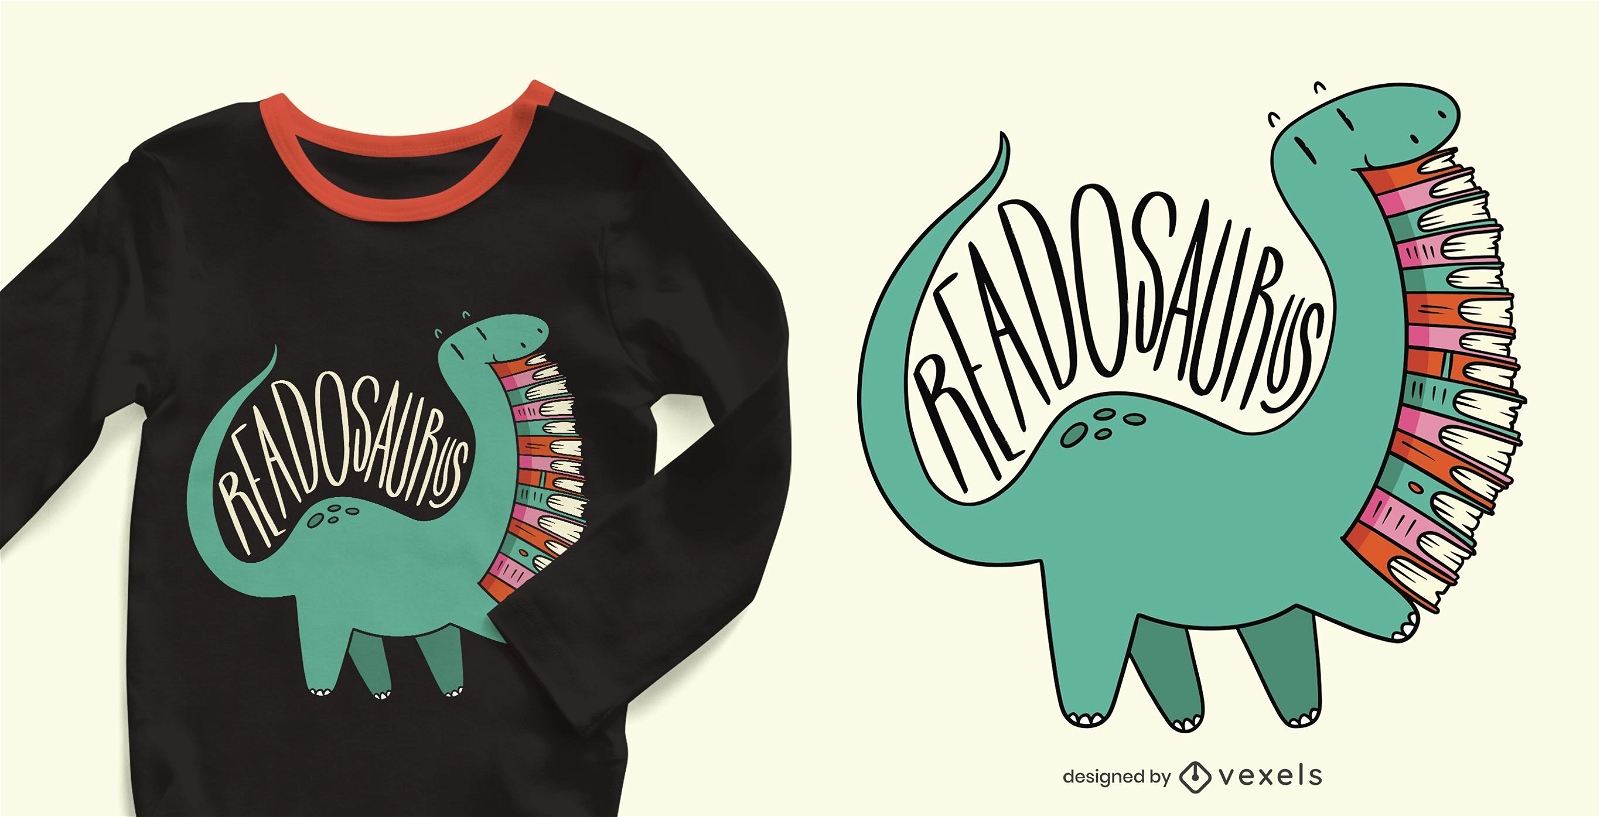 Readosaurus T-Shirt Design